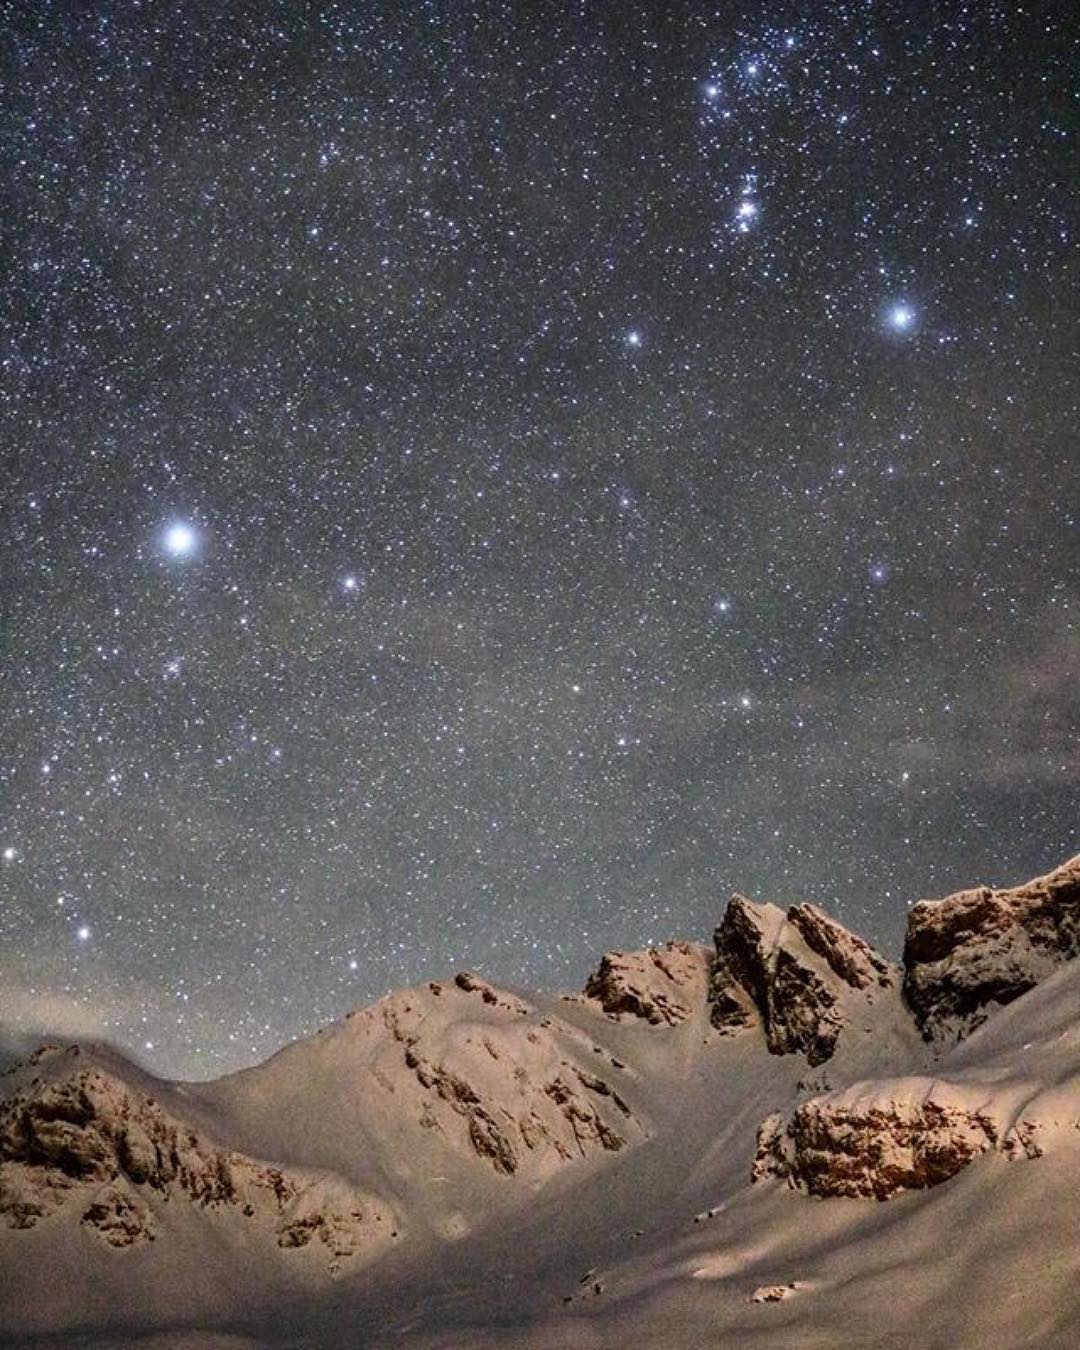 ❤️ #Repost @lspichtig
the night sky up here @melchseefrutt is magical ✨
#night #sky #stars #melchseefrutt